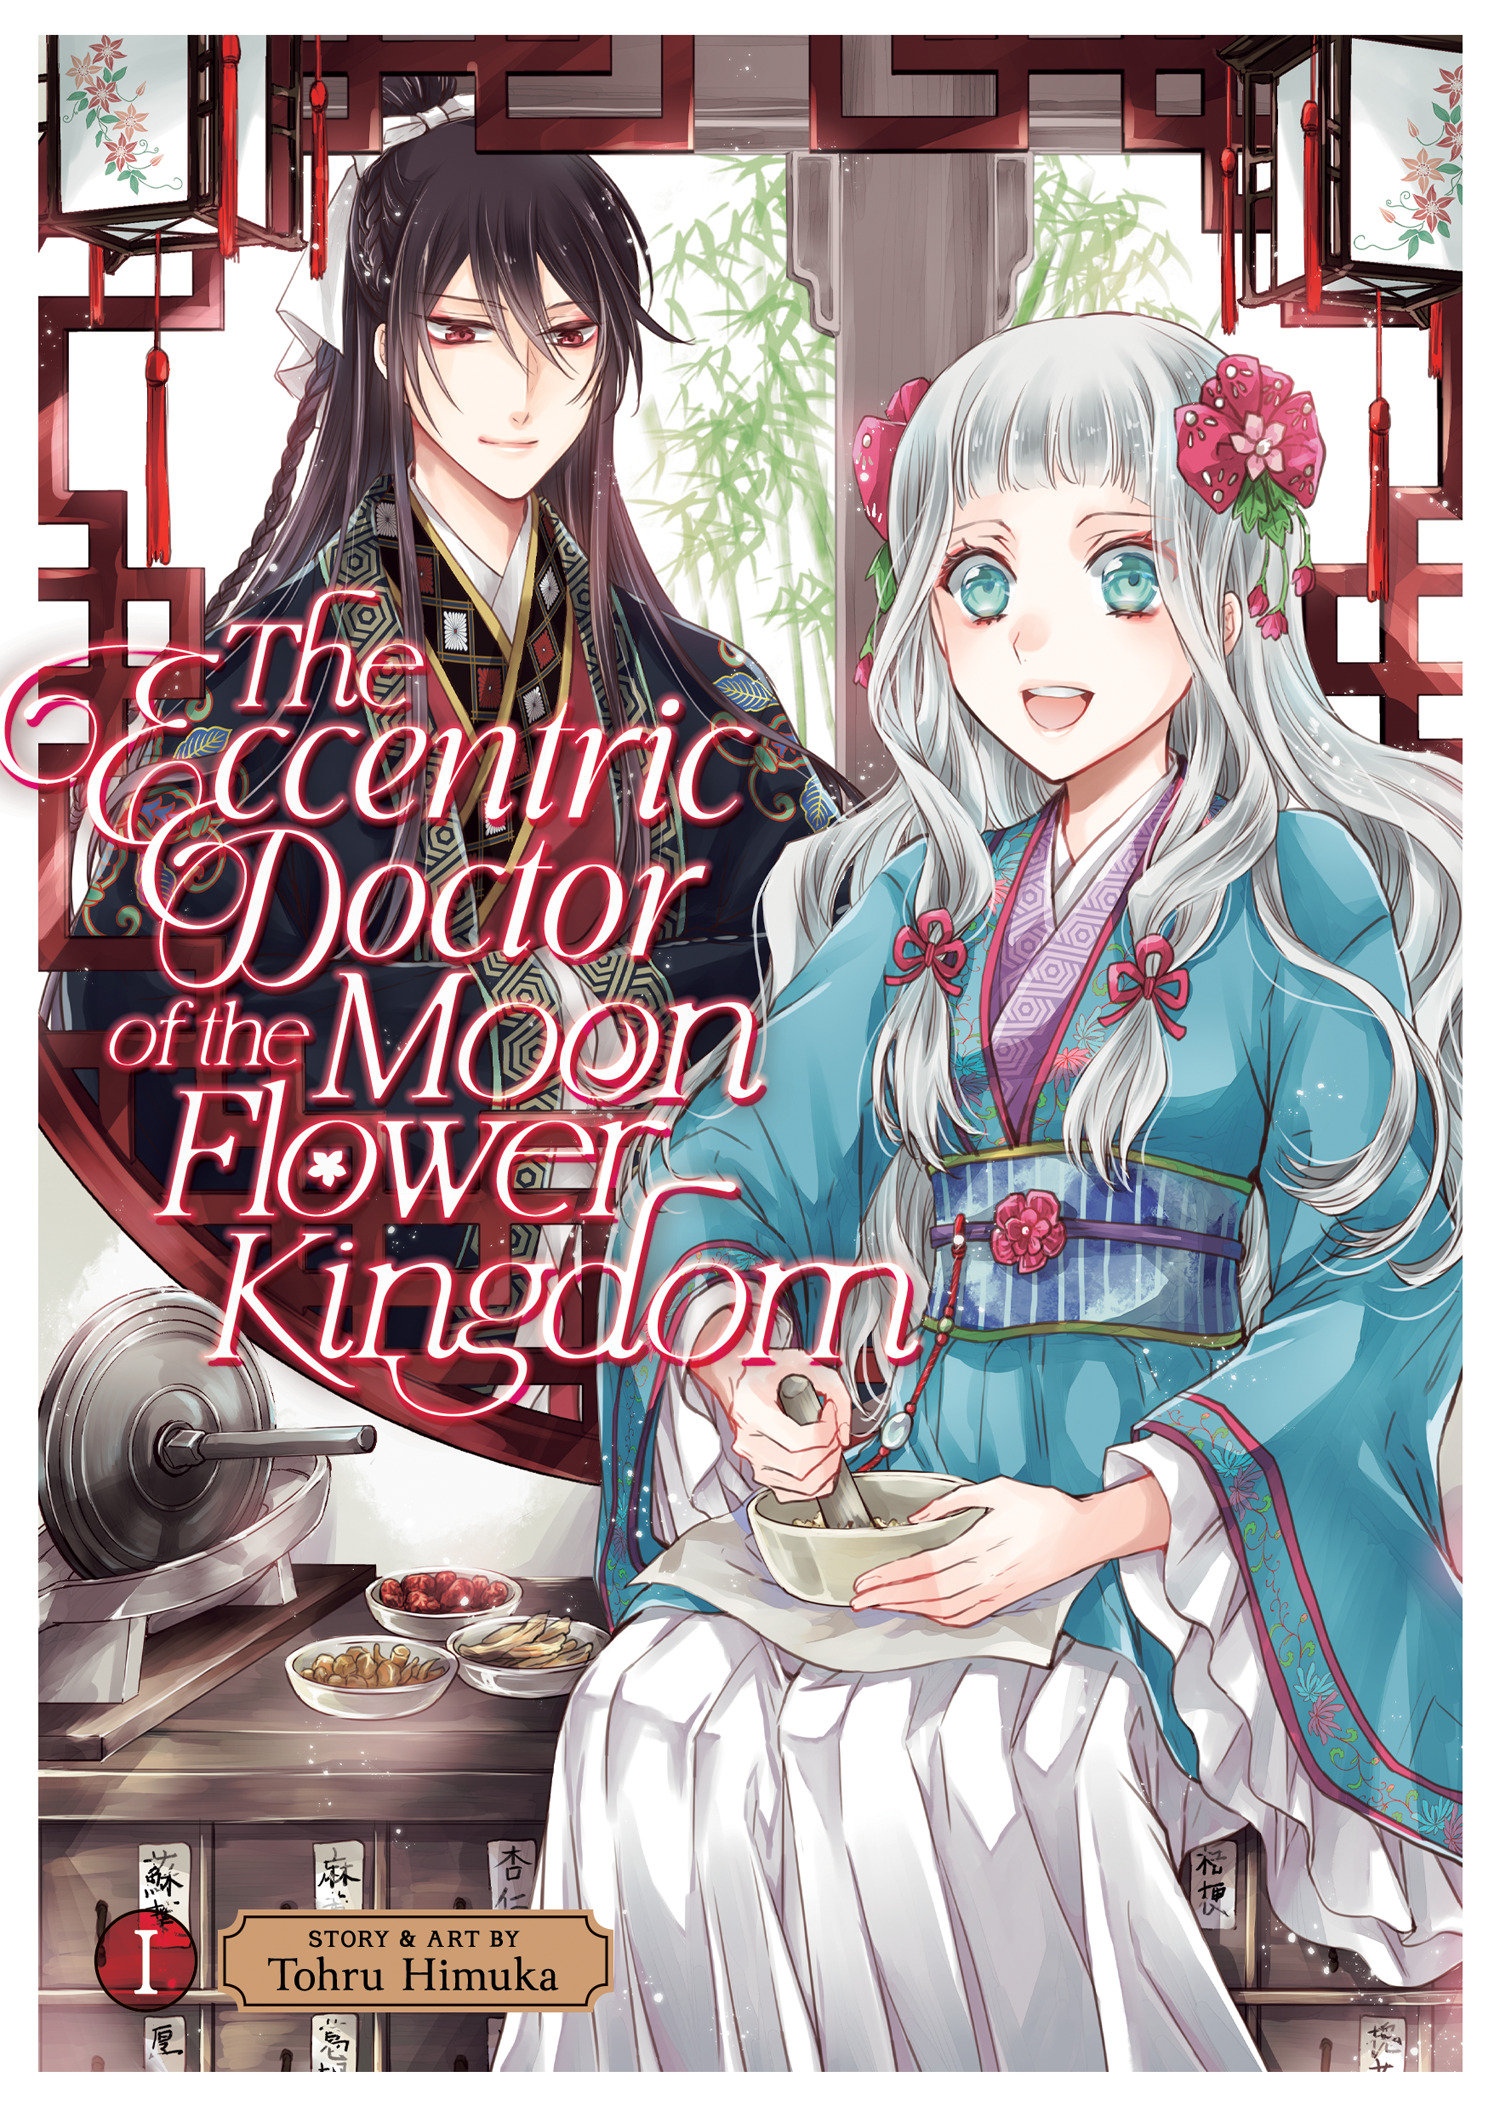 Eccentric Doctor of the Moon Flower Kingdom Manga Volume 1